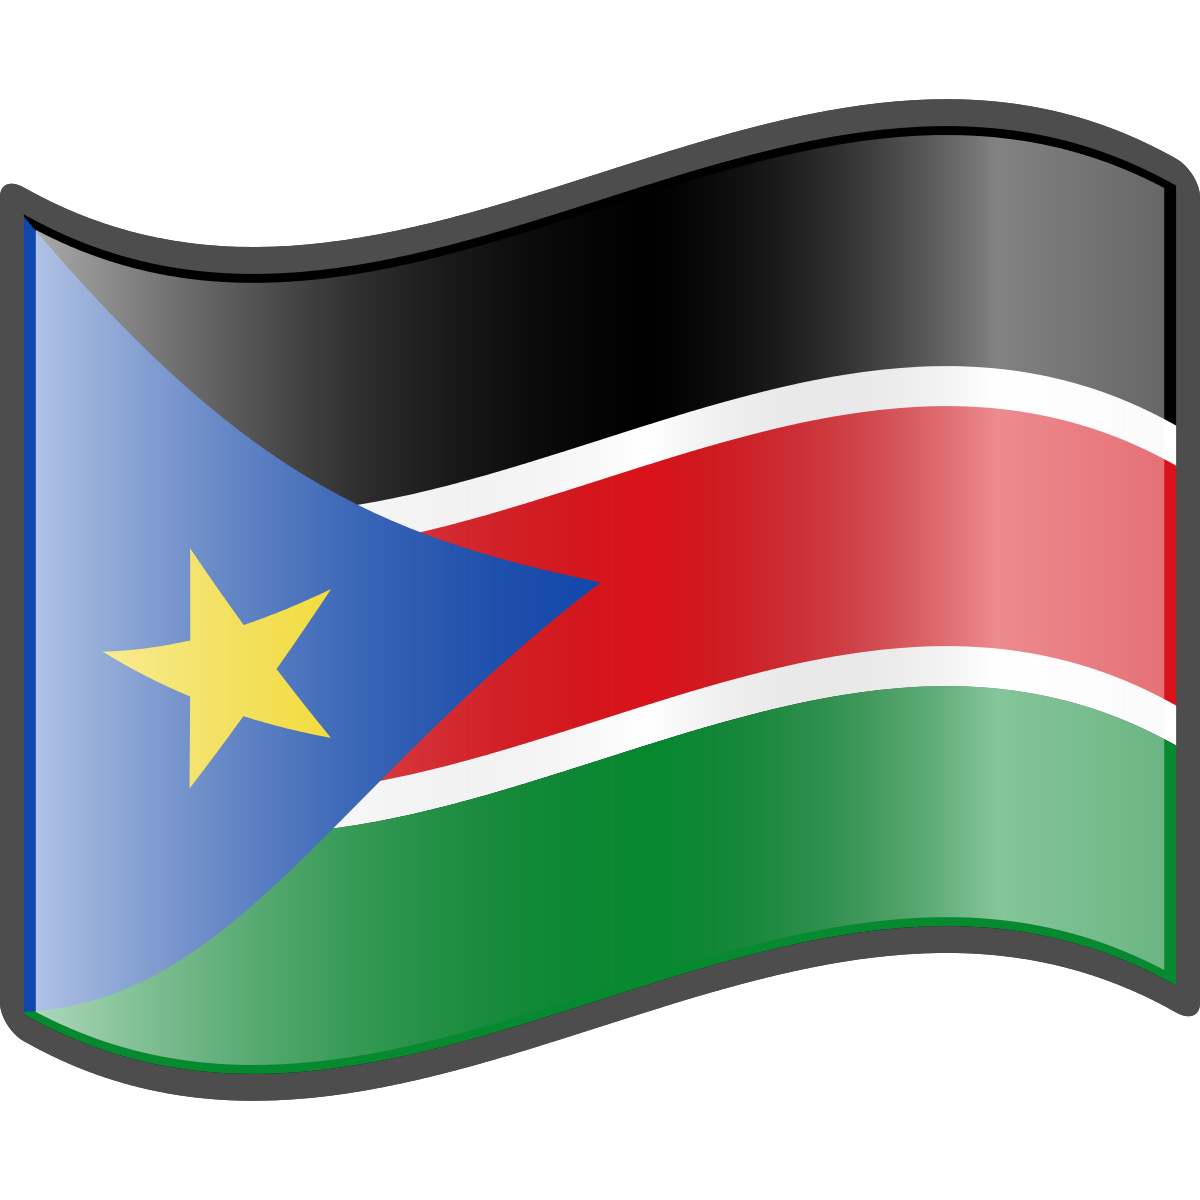 Sudan Flag Download PNG Image